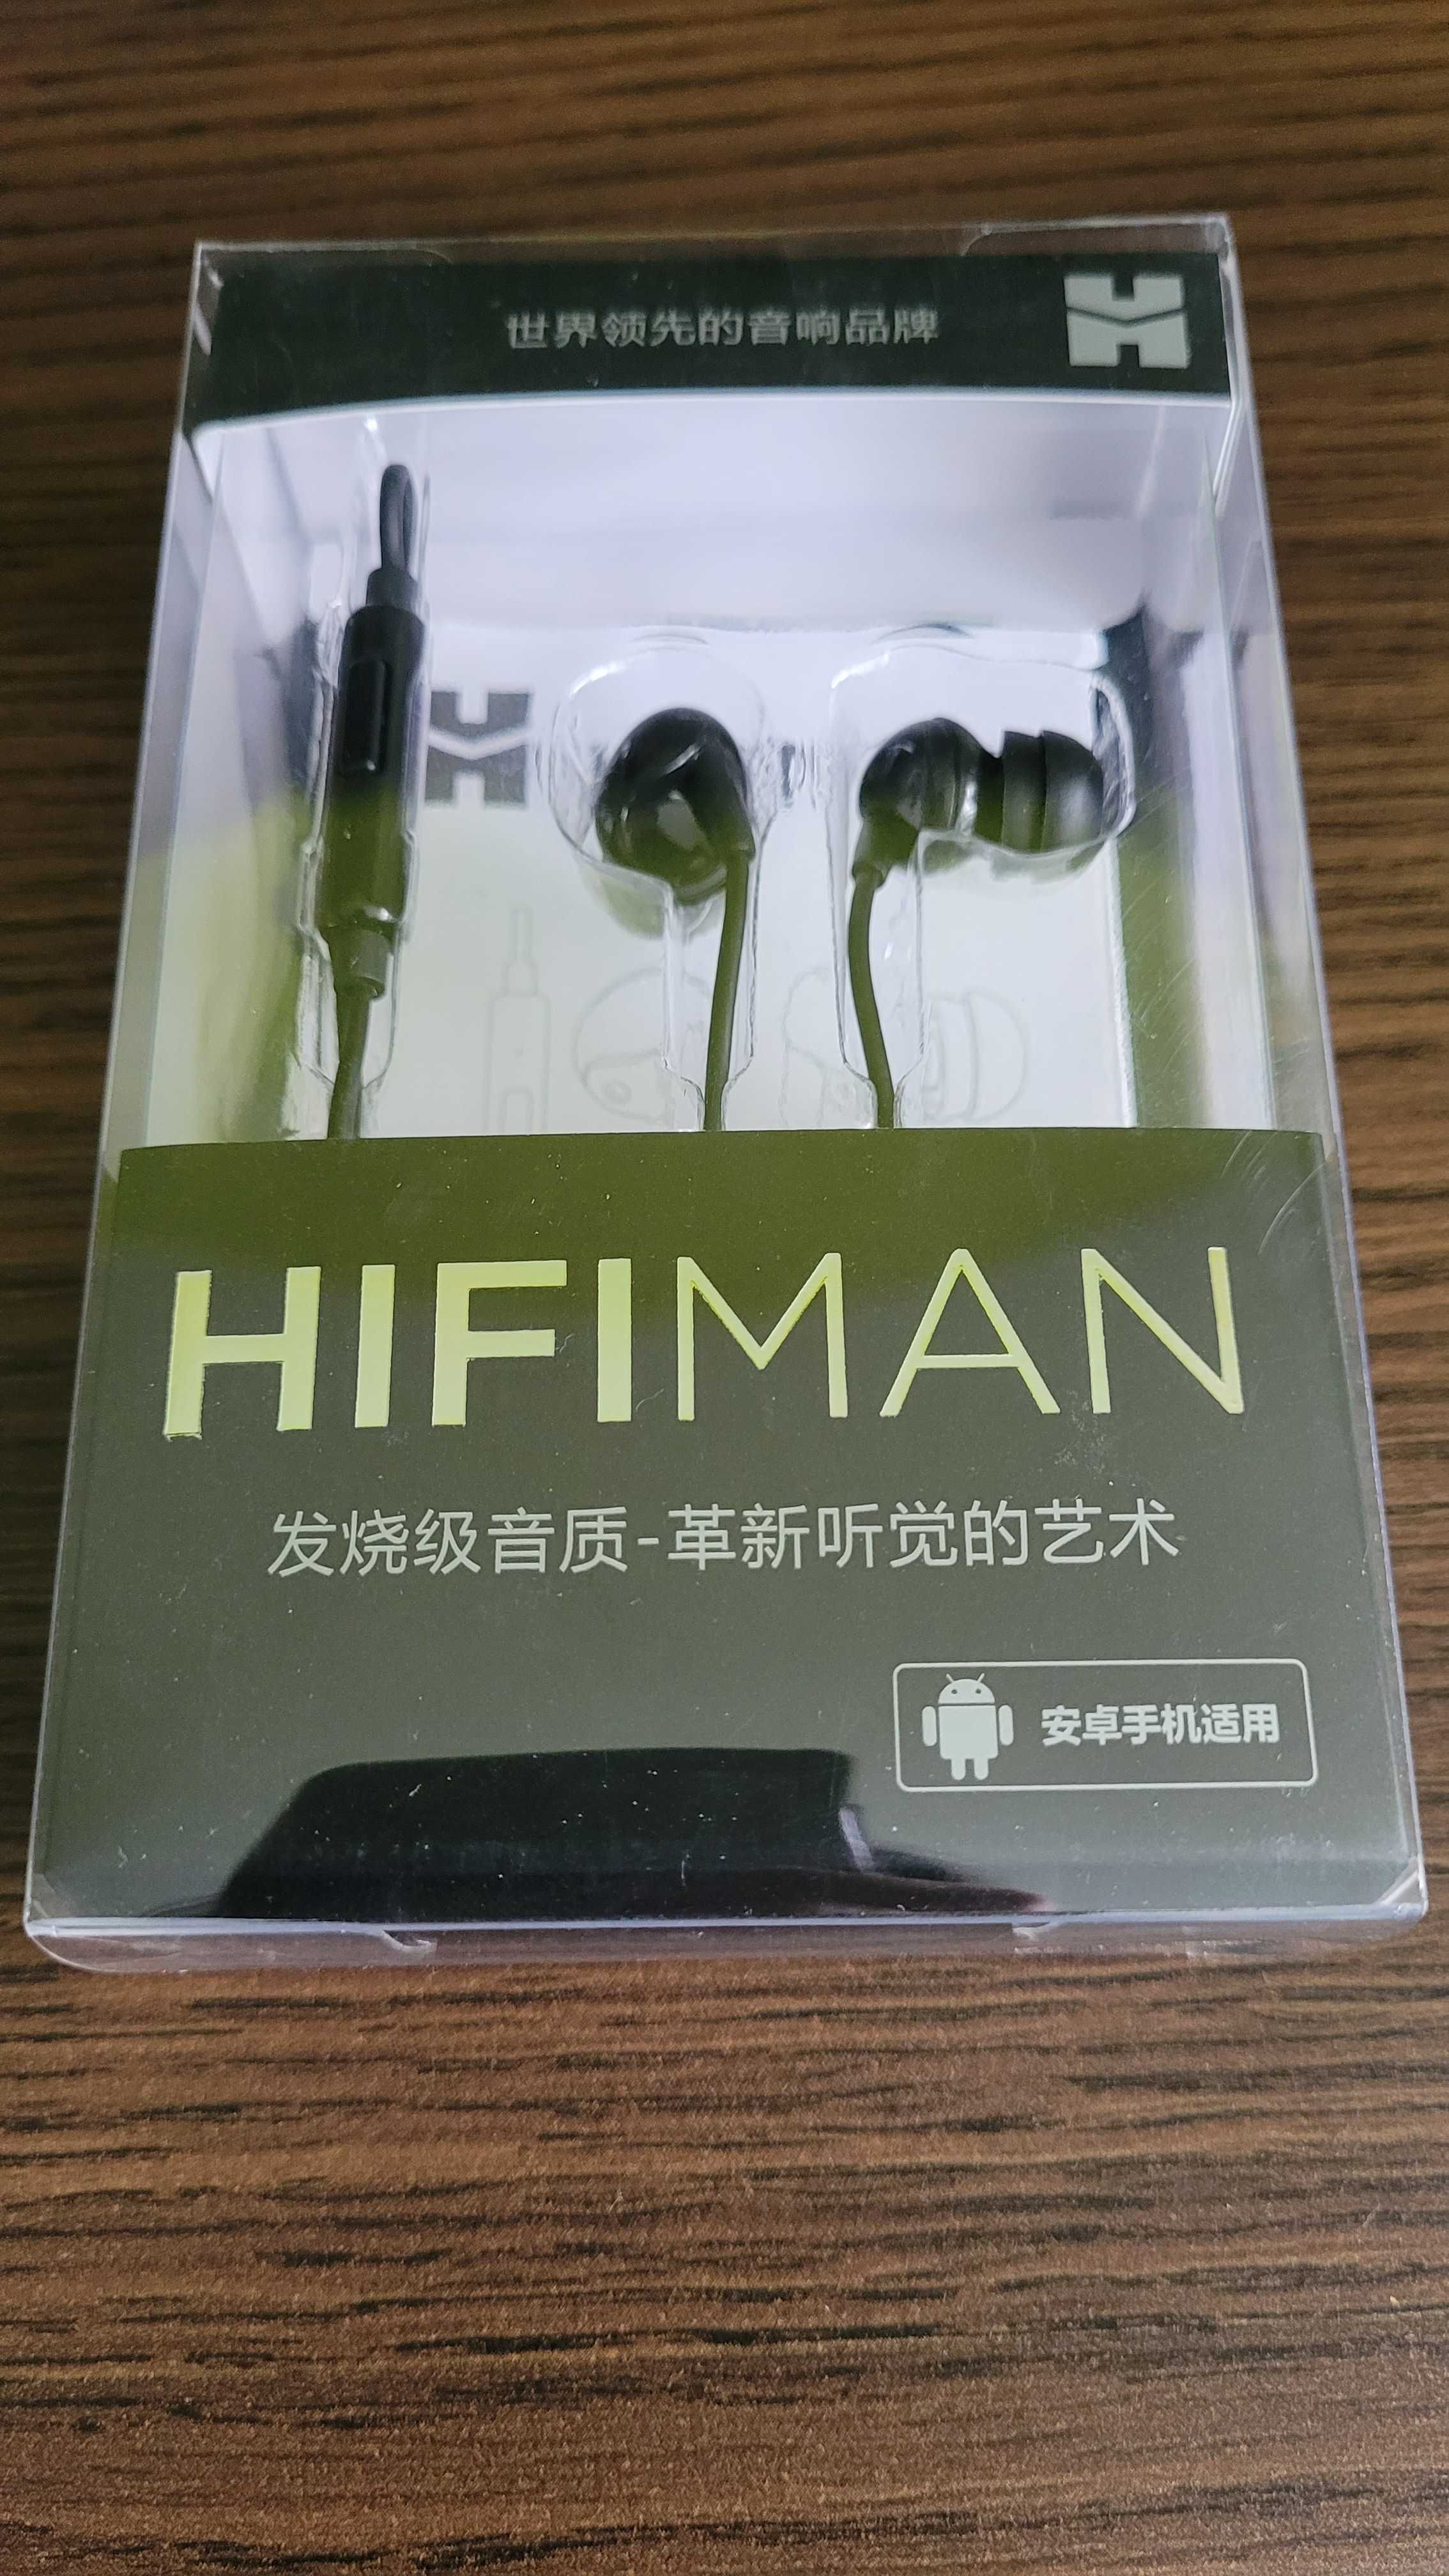 Słuchawki douszne Hifiman RE300a